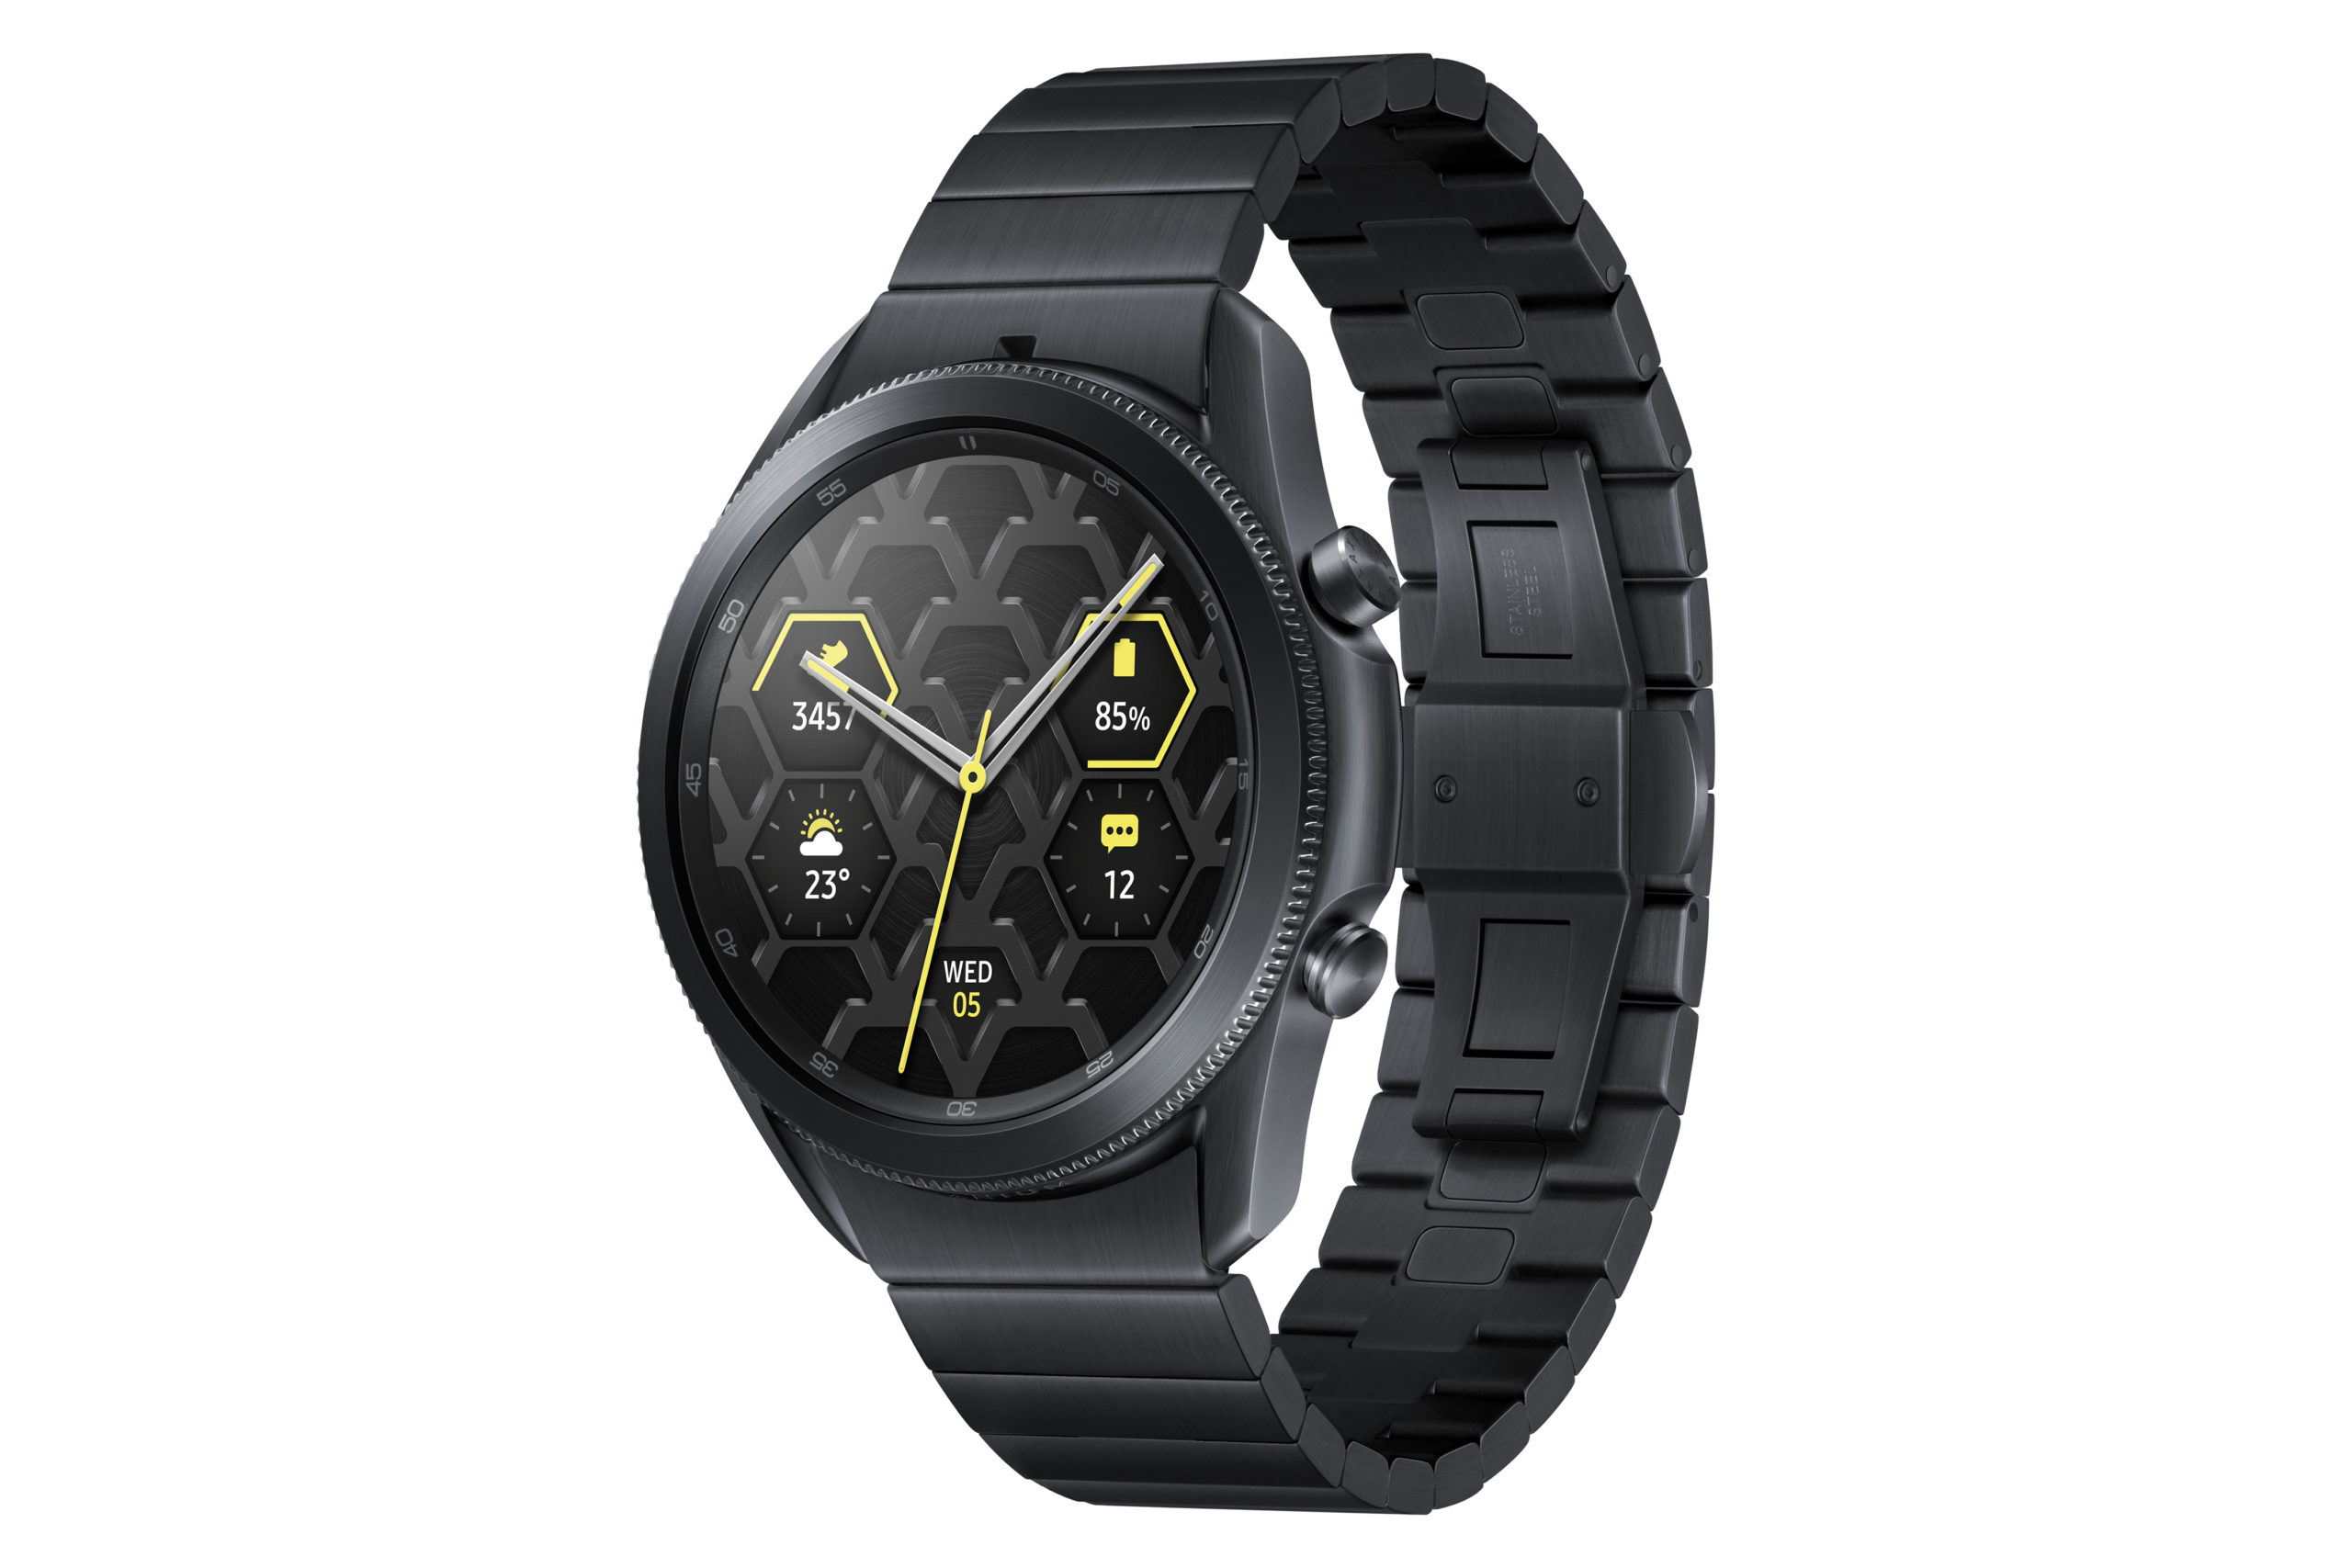 Galaxy Watch3 Titanium Mystic Black 新品